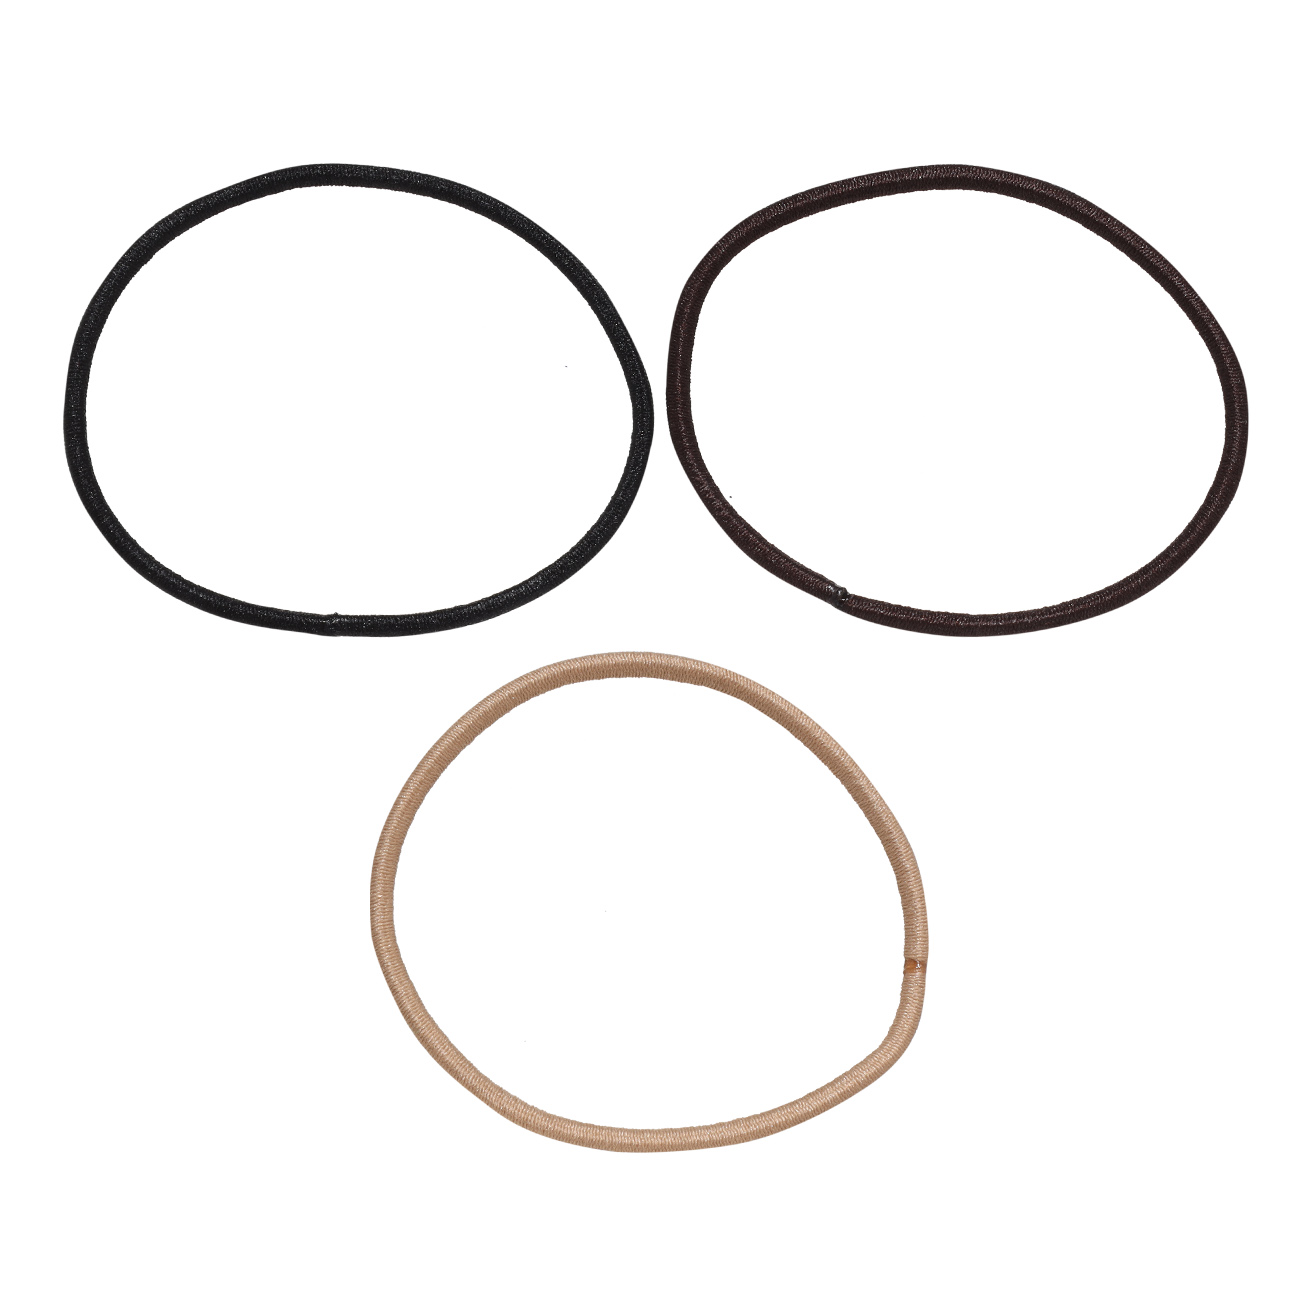 Elastic band for hair, 4 cm, 24 pcs, polyester, black / brown / beige, Basic изображение № 2